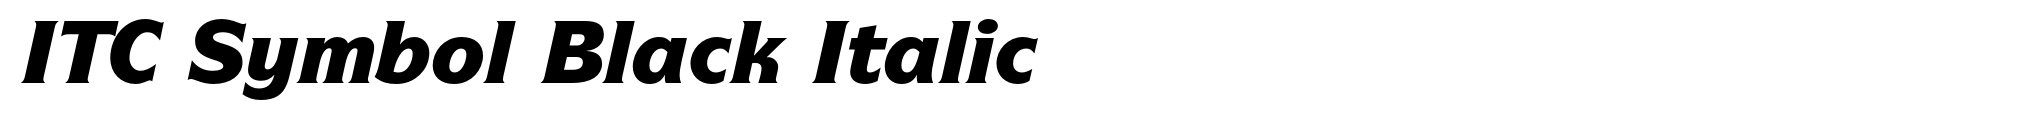 ITC Symbol Black Italic image